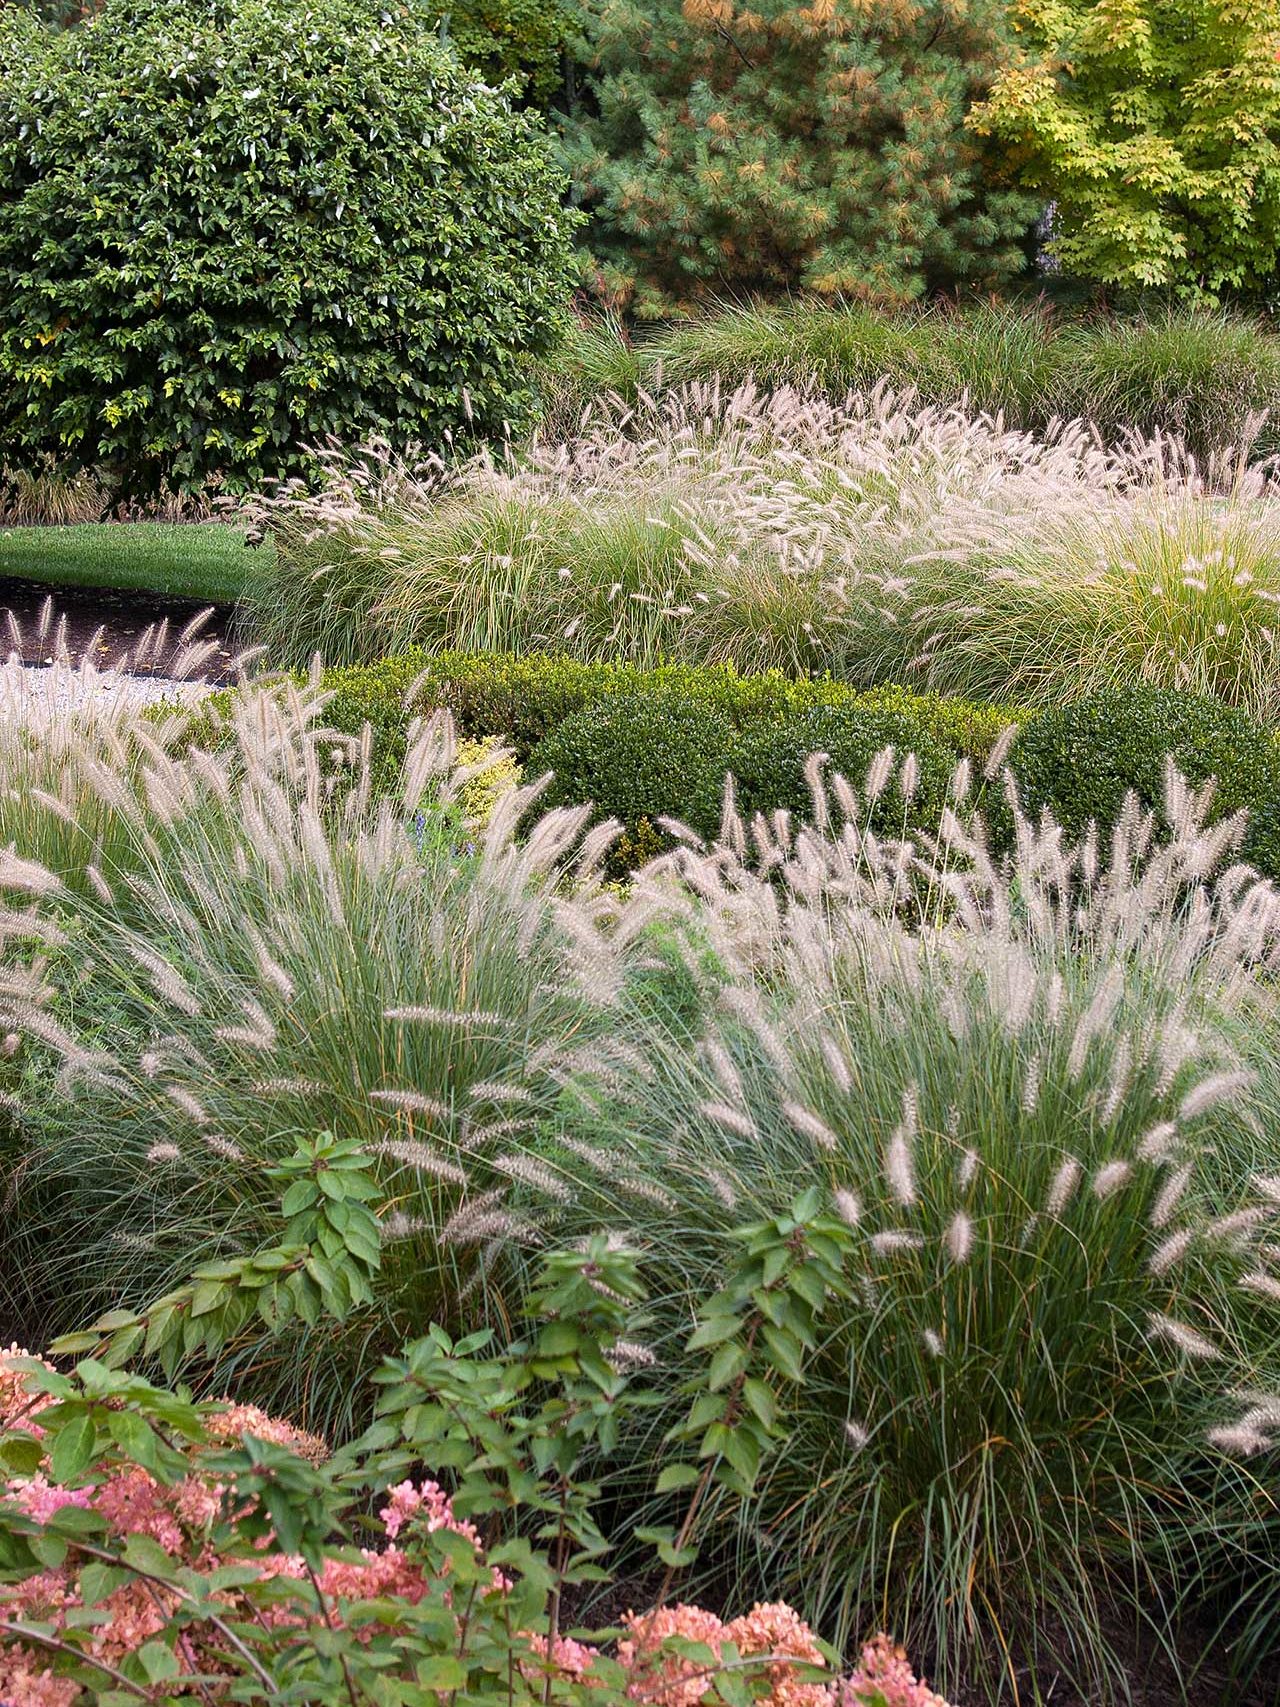 Weston, MA - ornamental grasses and formal garden